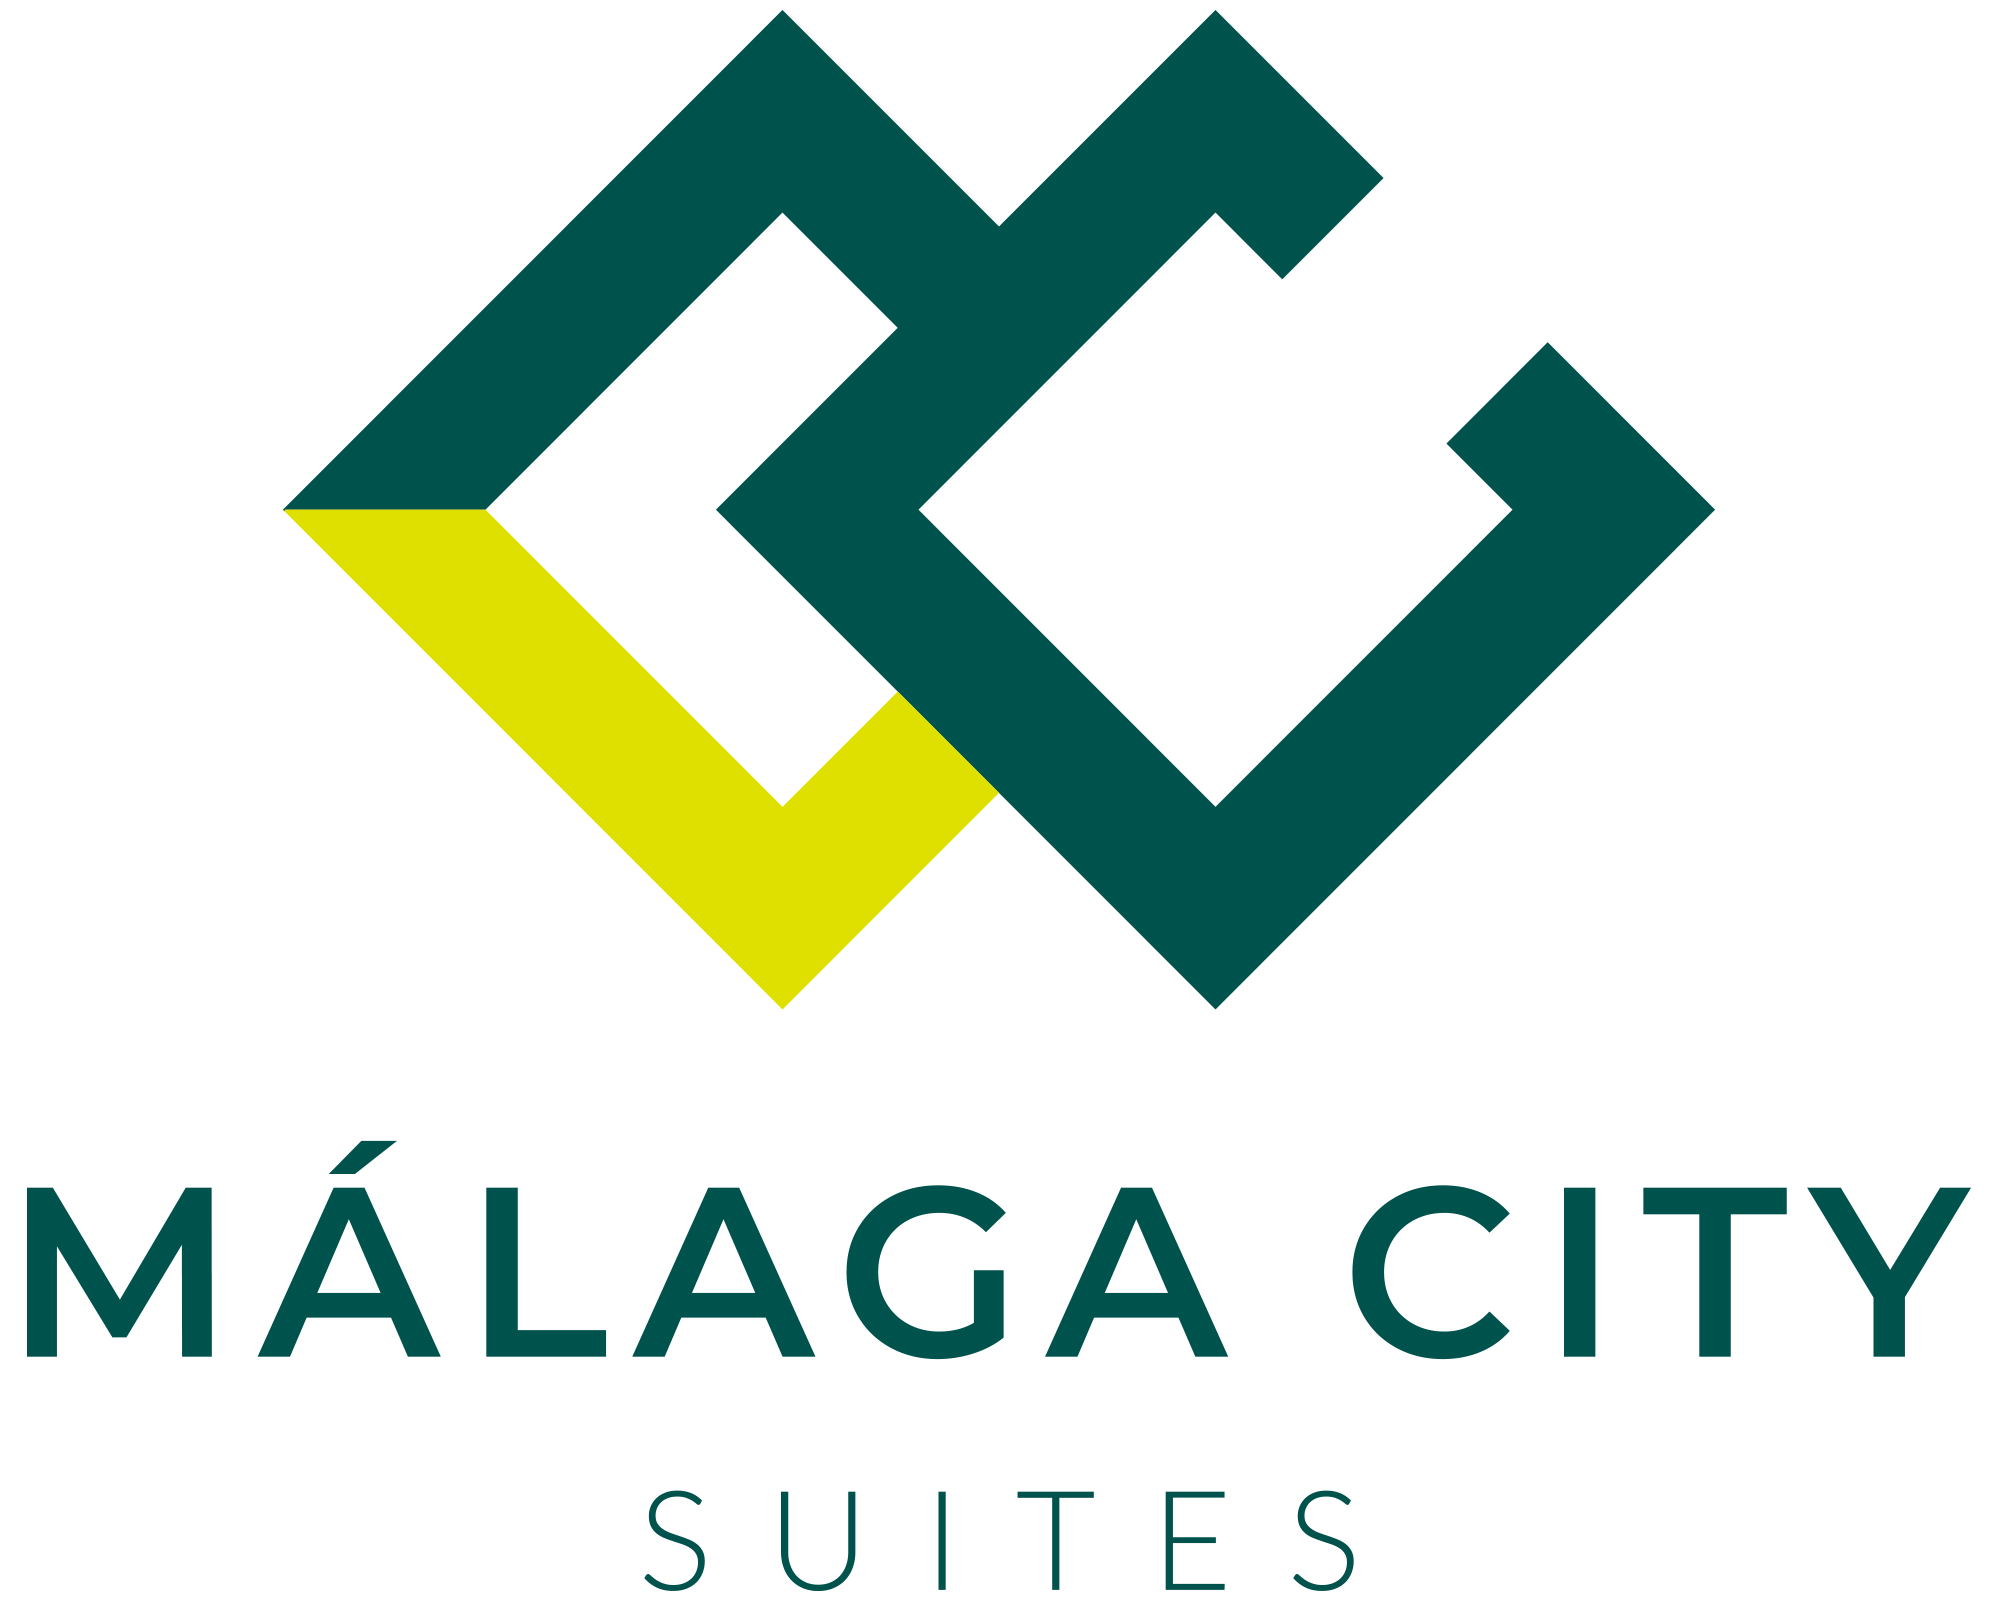 MÁLAGA CITY SUITES logo